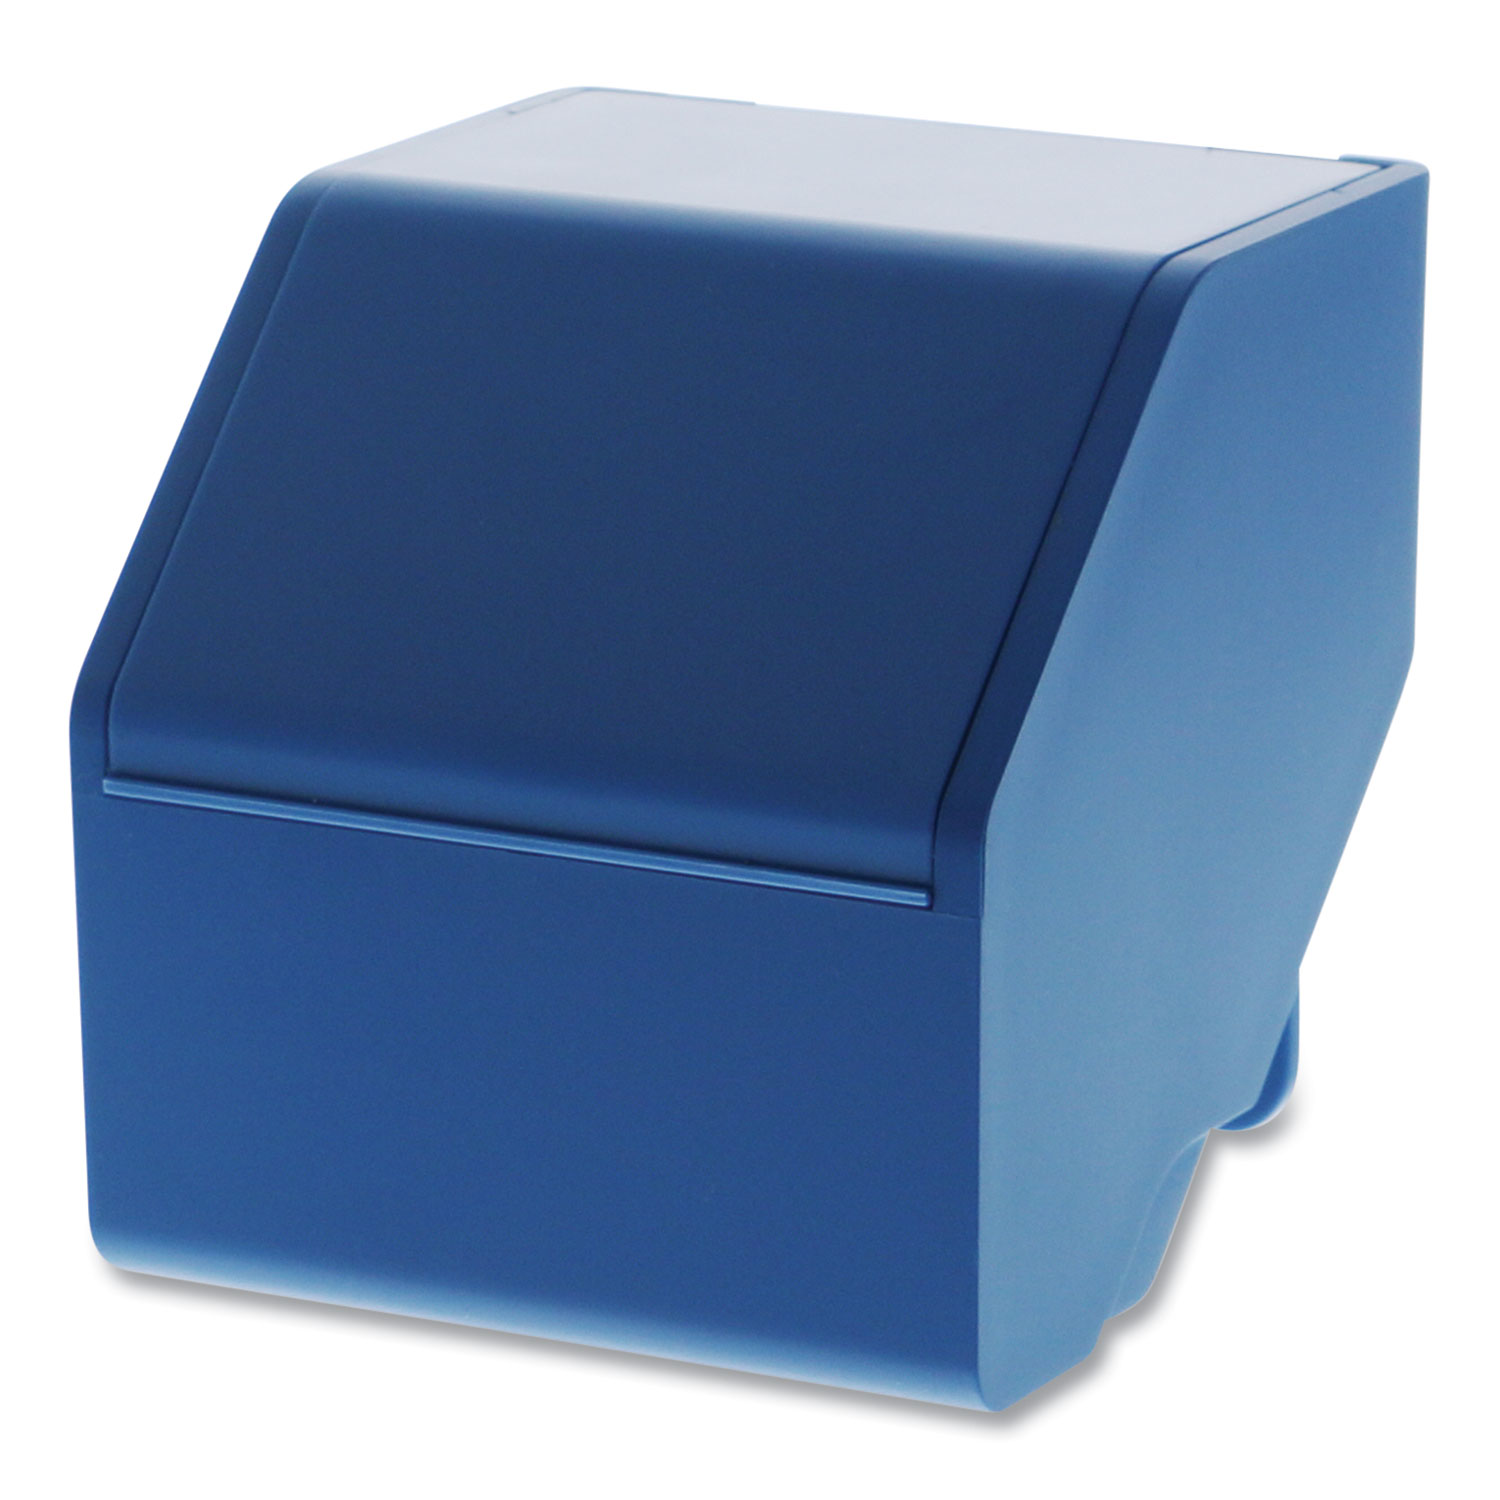  Bostitch KT-CUP-BLUE Konnect Desktop Organizer Storage Bin, Short, 3.4 x 3.5 x 3.5, Blue (BOS24339991) 